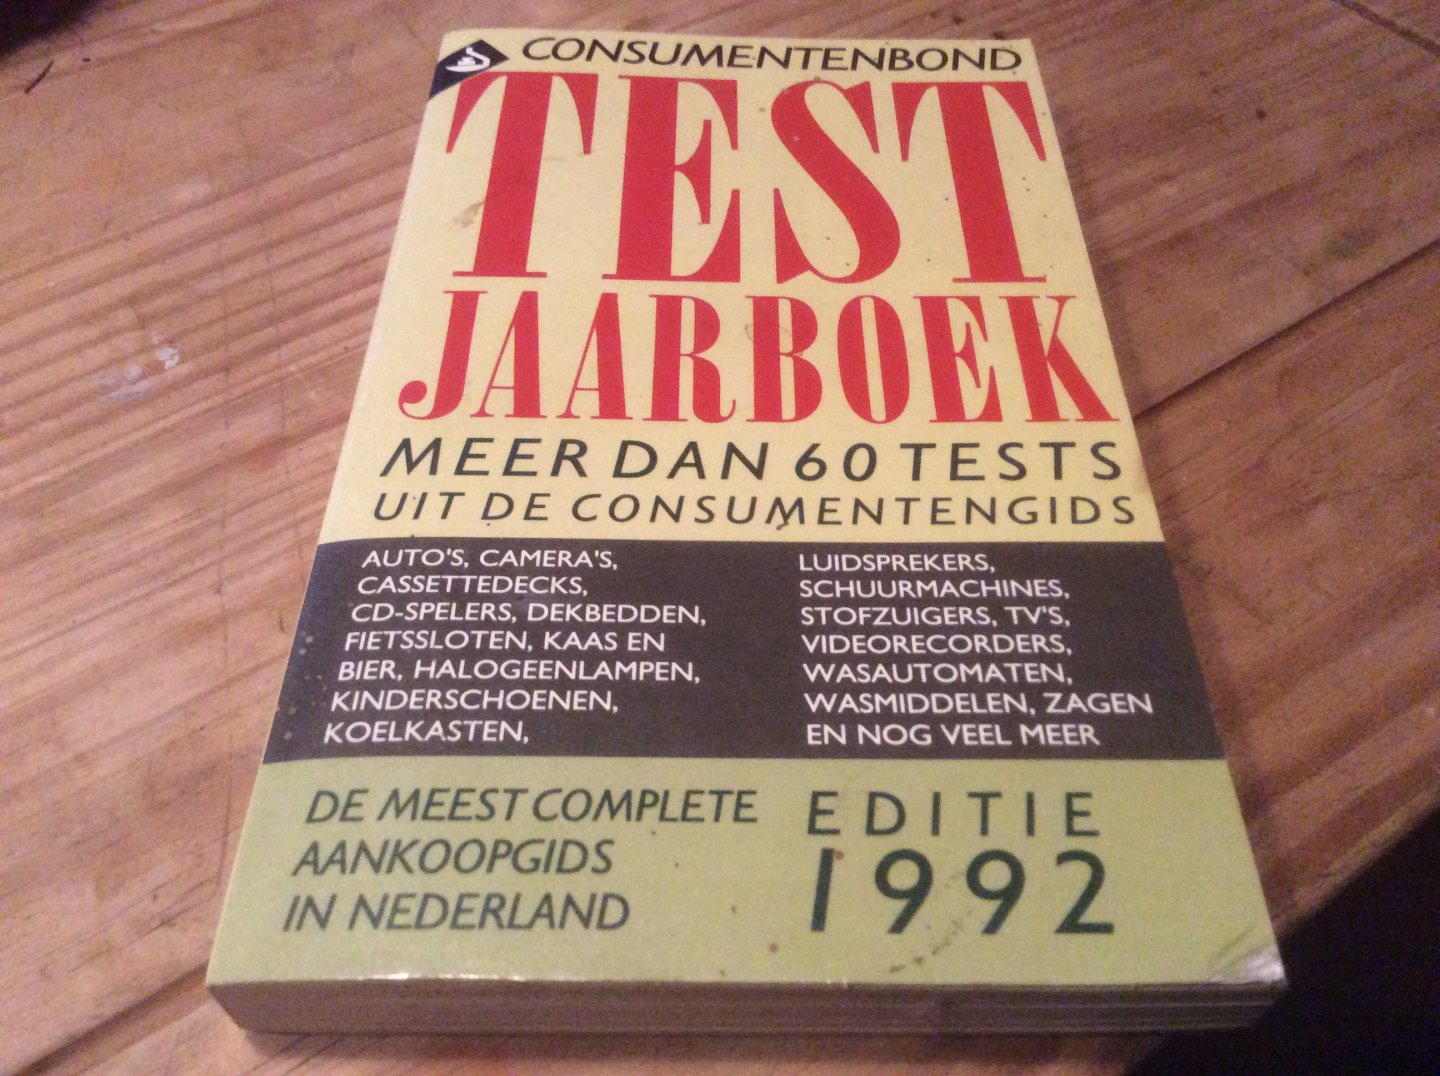 Consumentenbond - Consumentenbond test jaarboek 1992